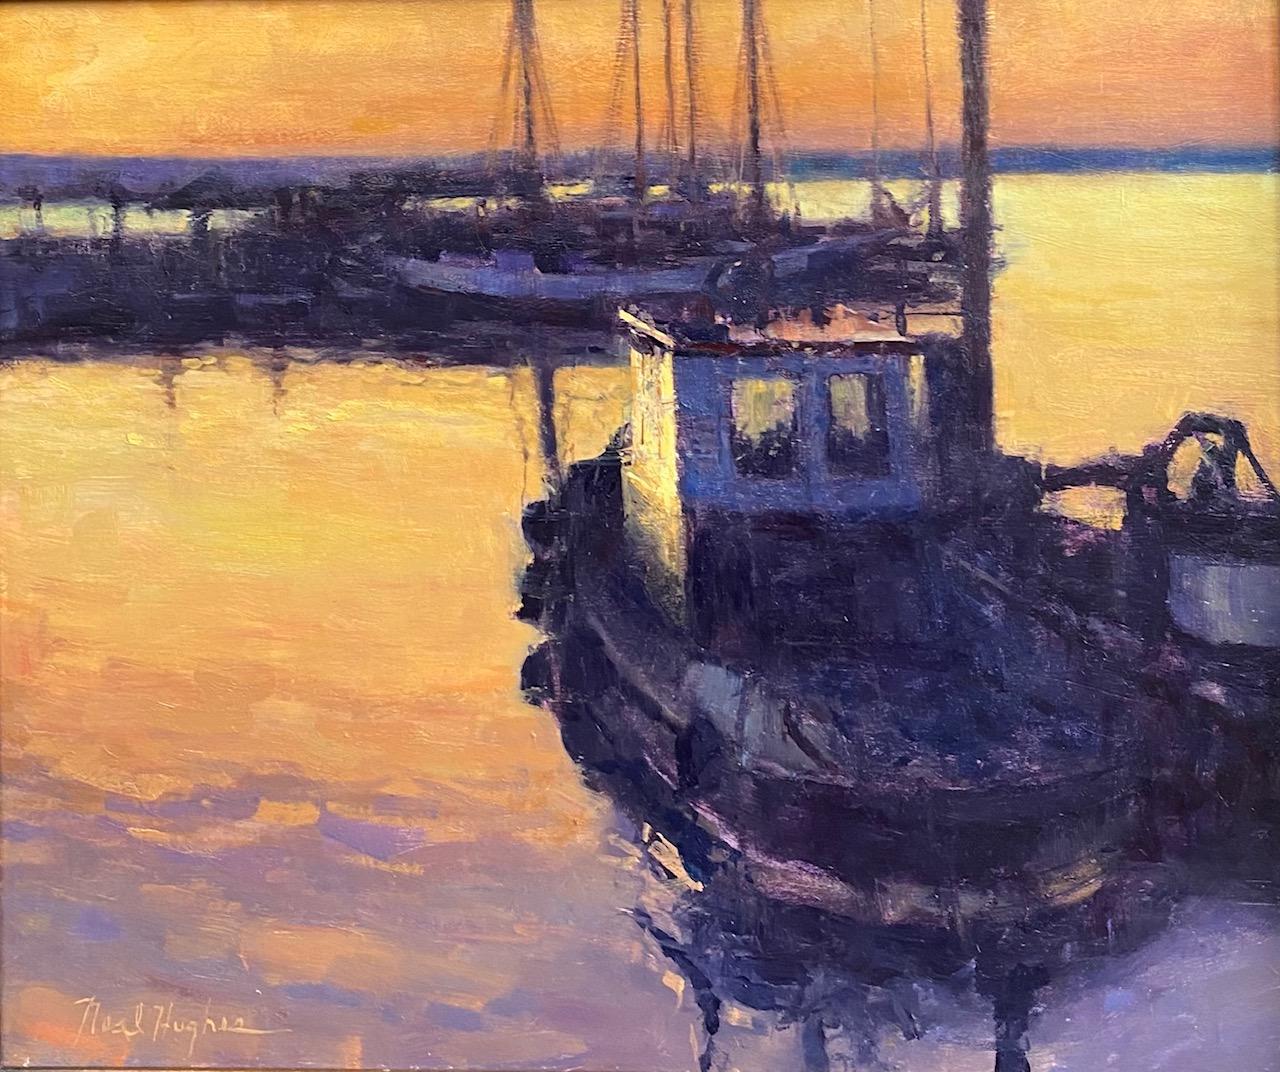 Sunrise Tug, original realist impressionist nocturnal marine landscape - Painting by Neal Hughes